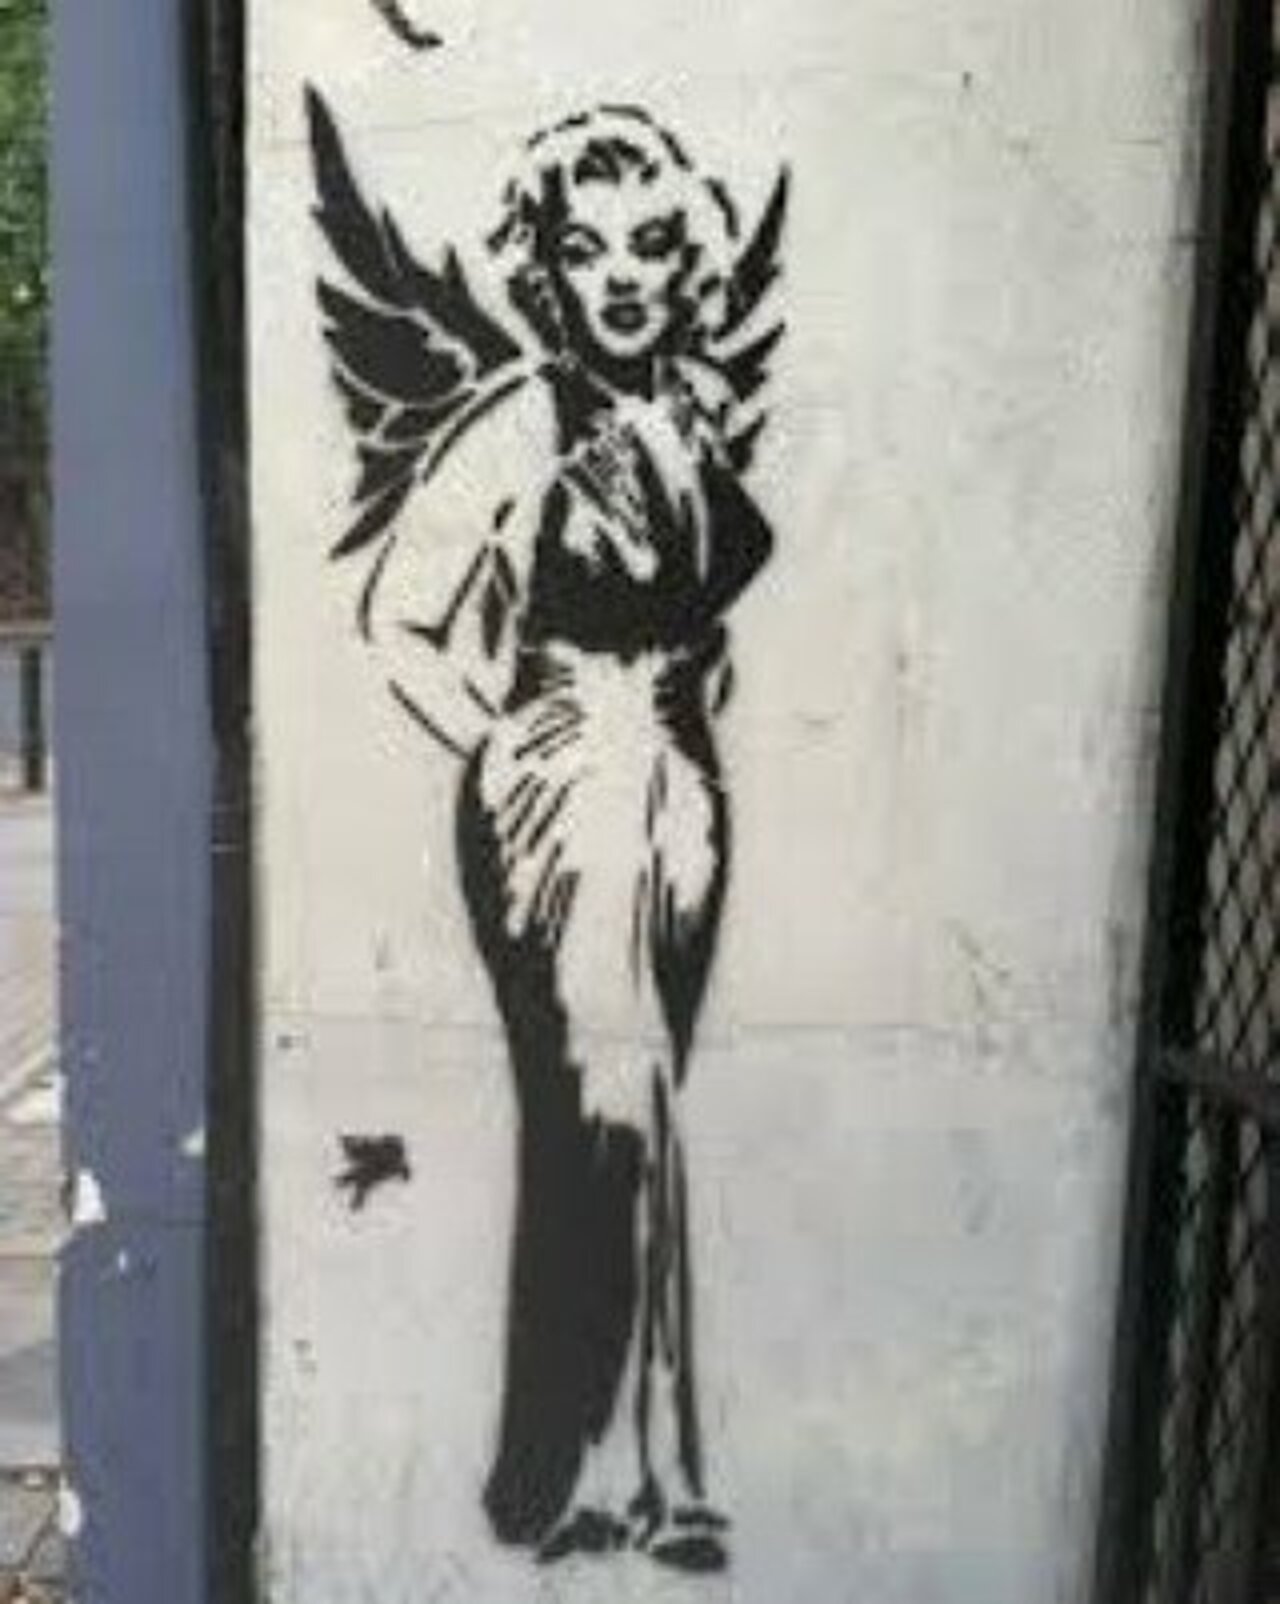 #zabouartist #streetart #art #graffiti #wallart #urbanart #zabou #londonstreetart #paris #streetartlondon #streetar… https://t.co/WojQMxoGKg